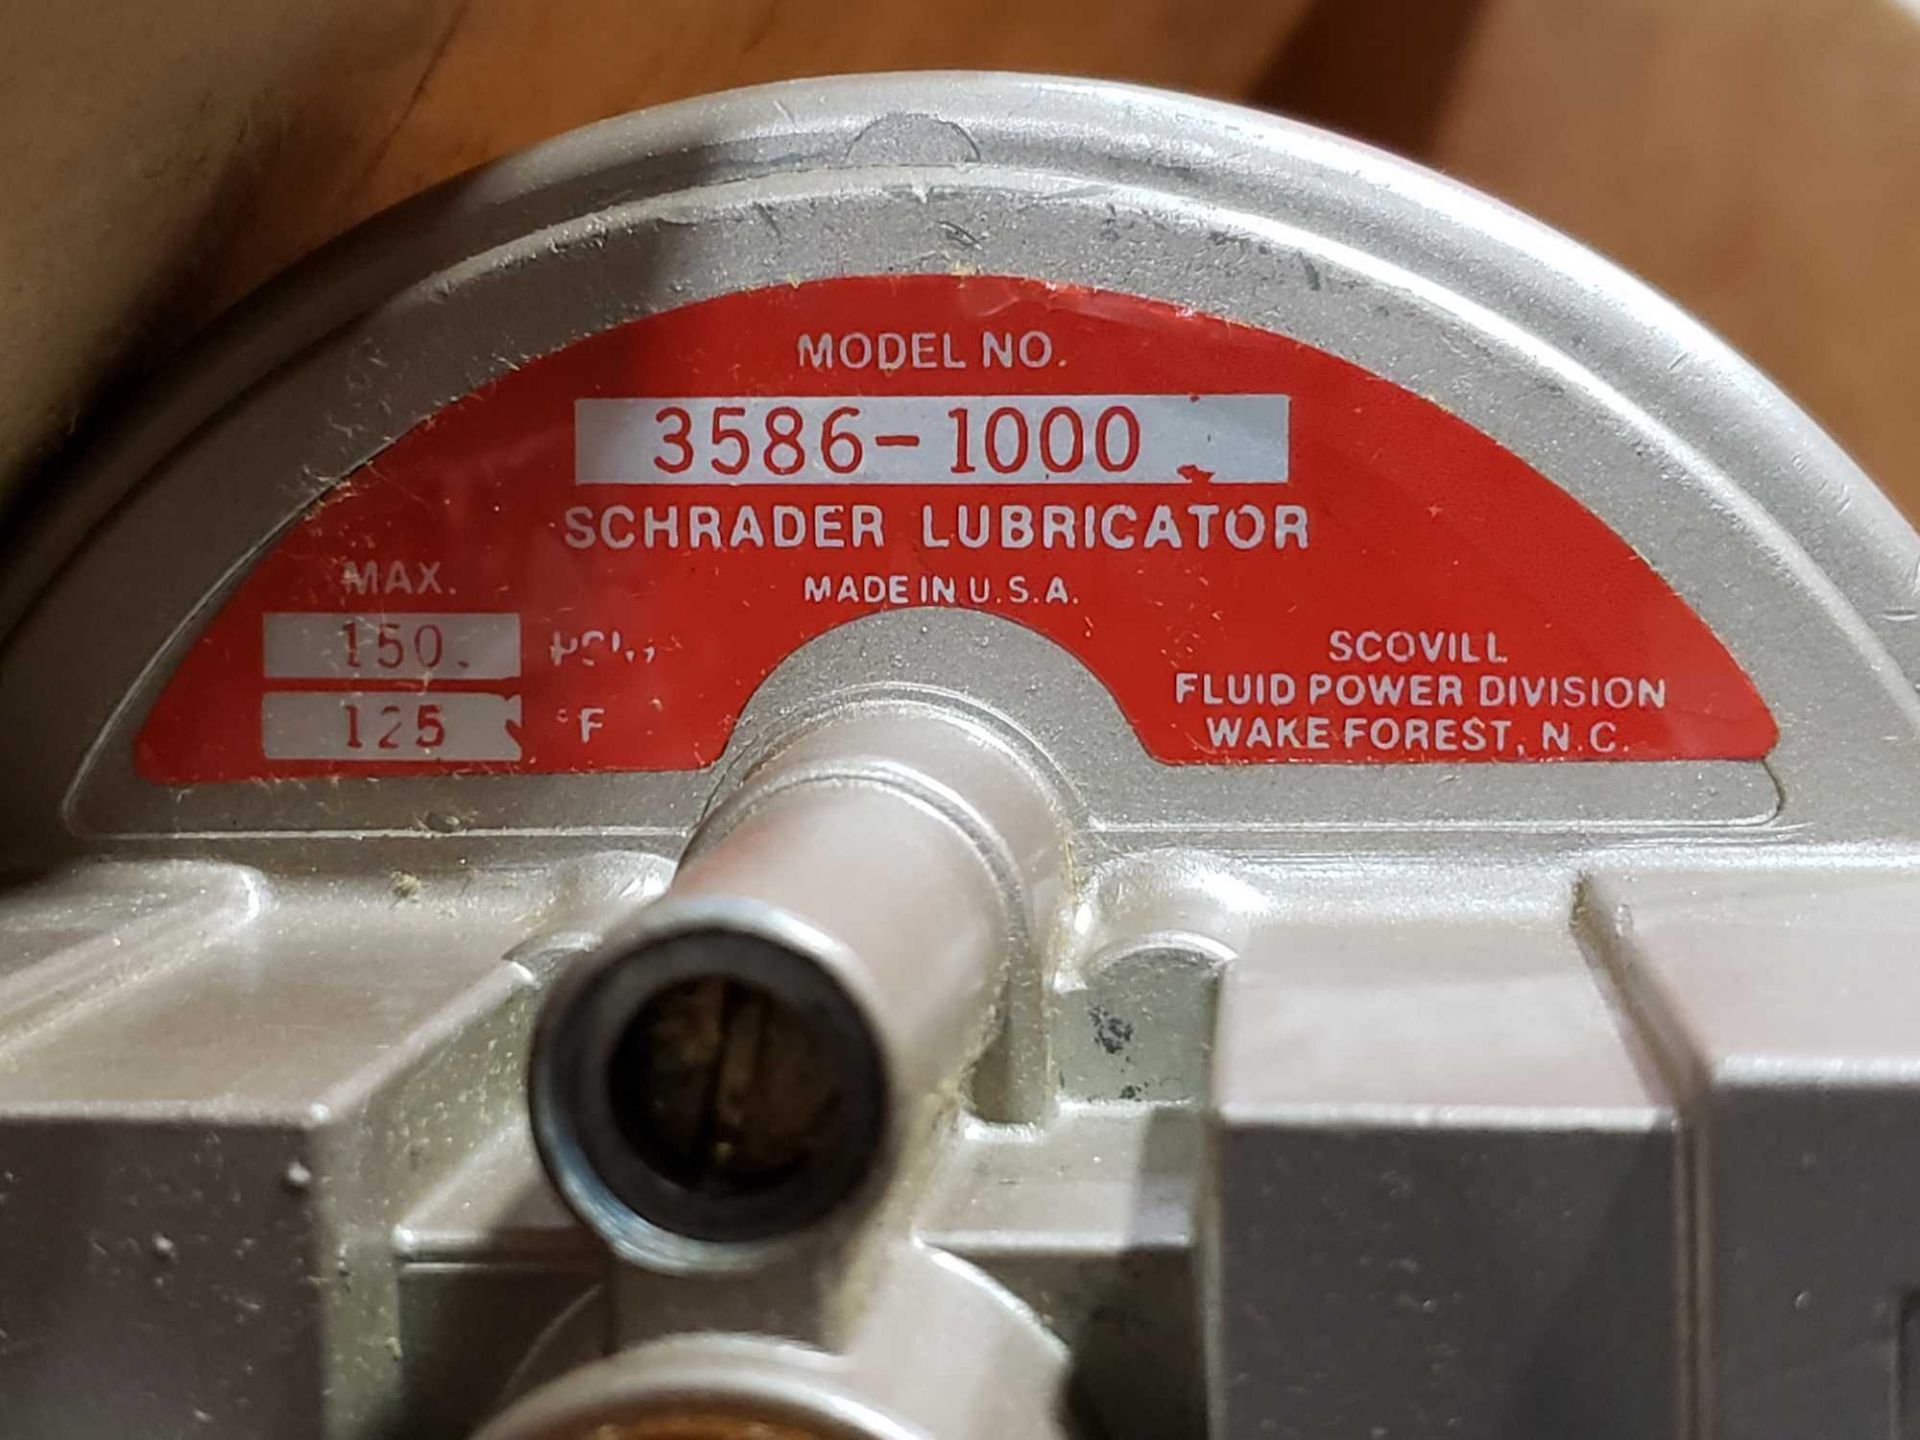 Schrader lubricator model 3586-1000. New in box. - Image 2 of 3